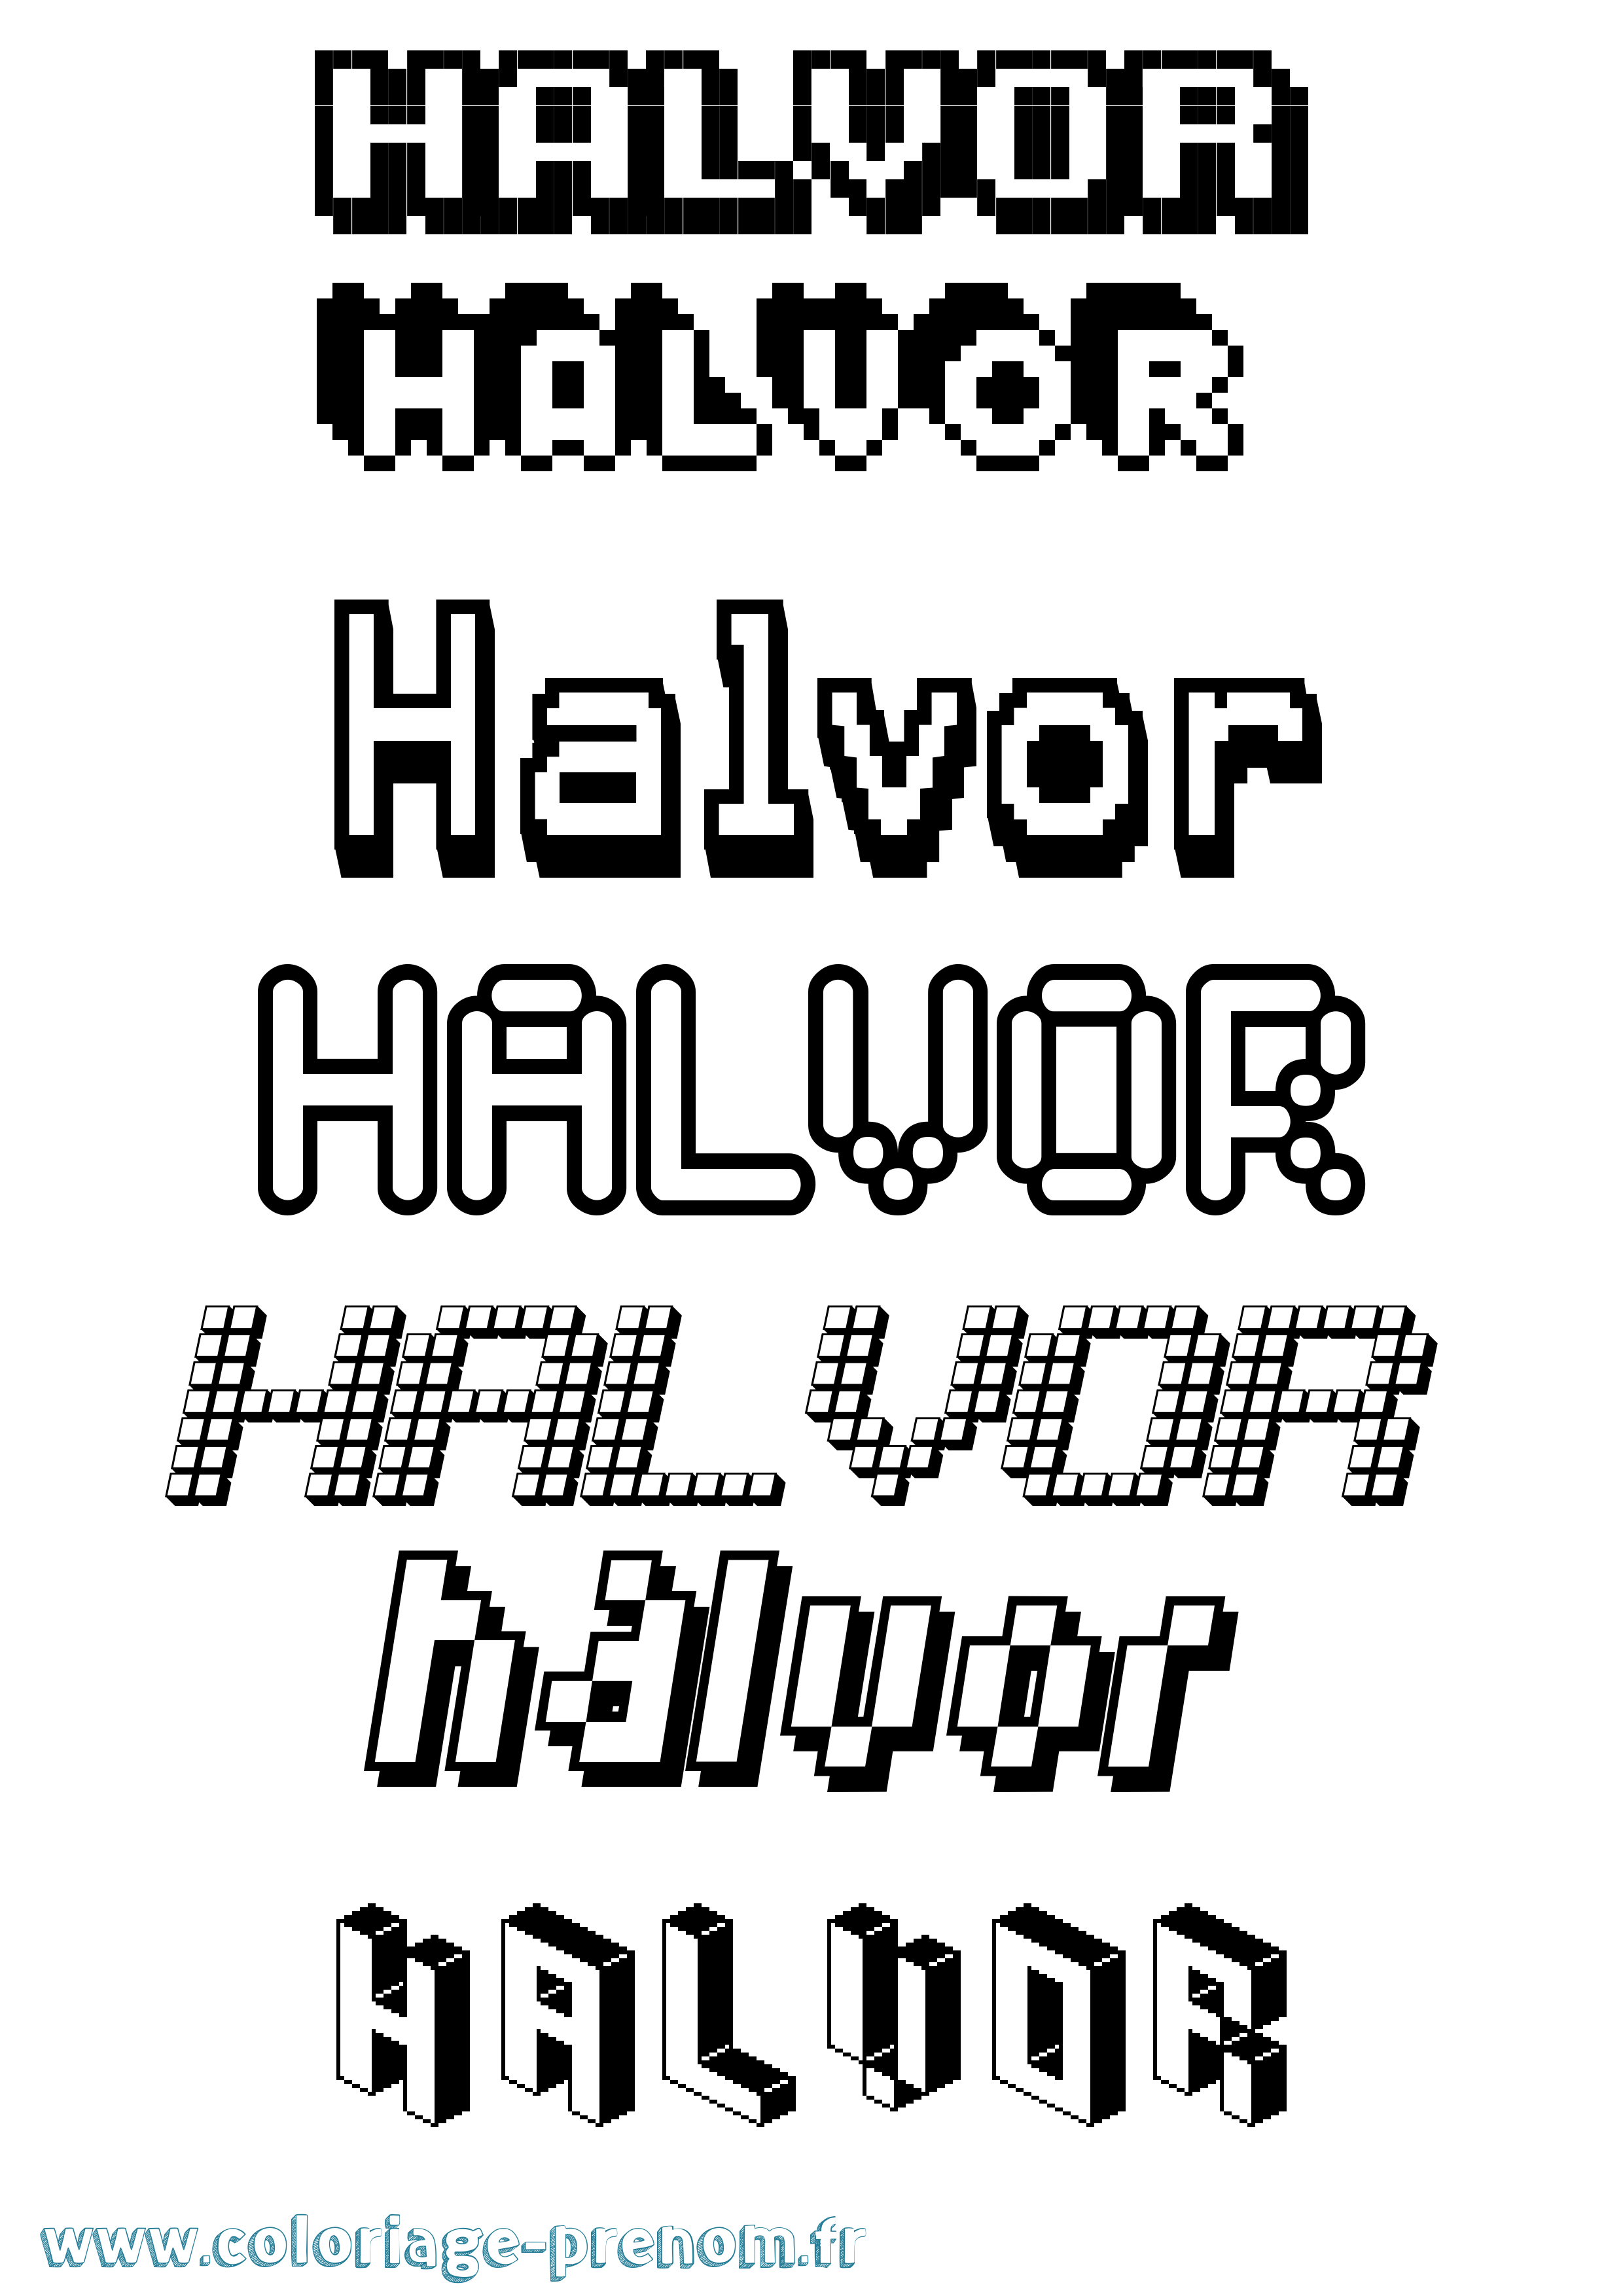 Coloriage prénom Halvor Pixel